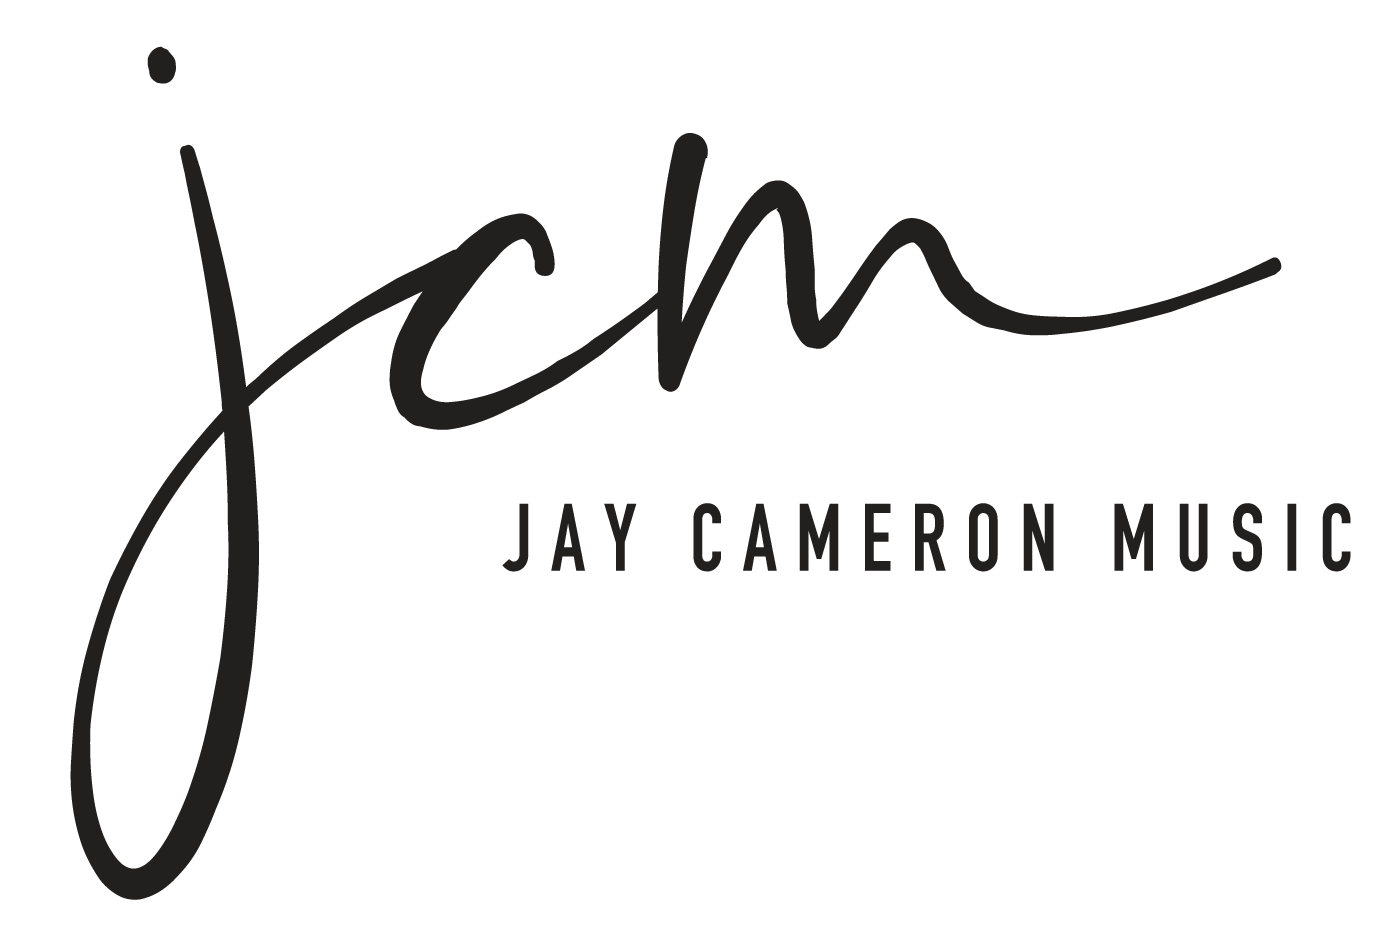 Jay Cameron Music